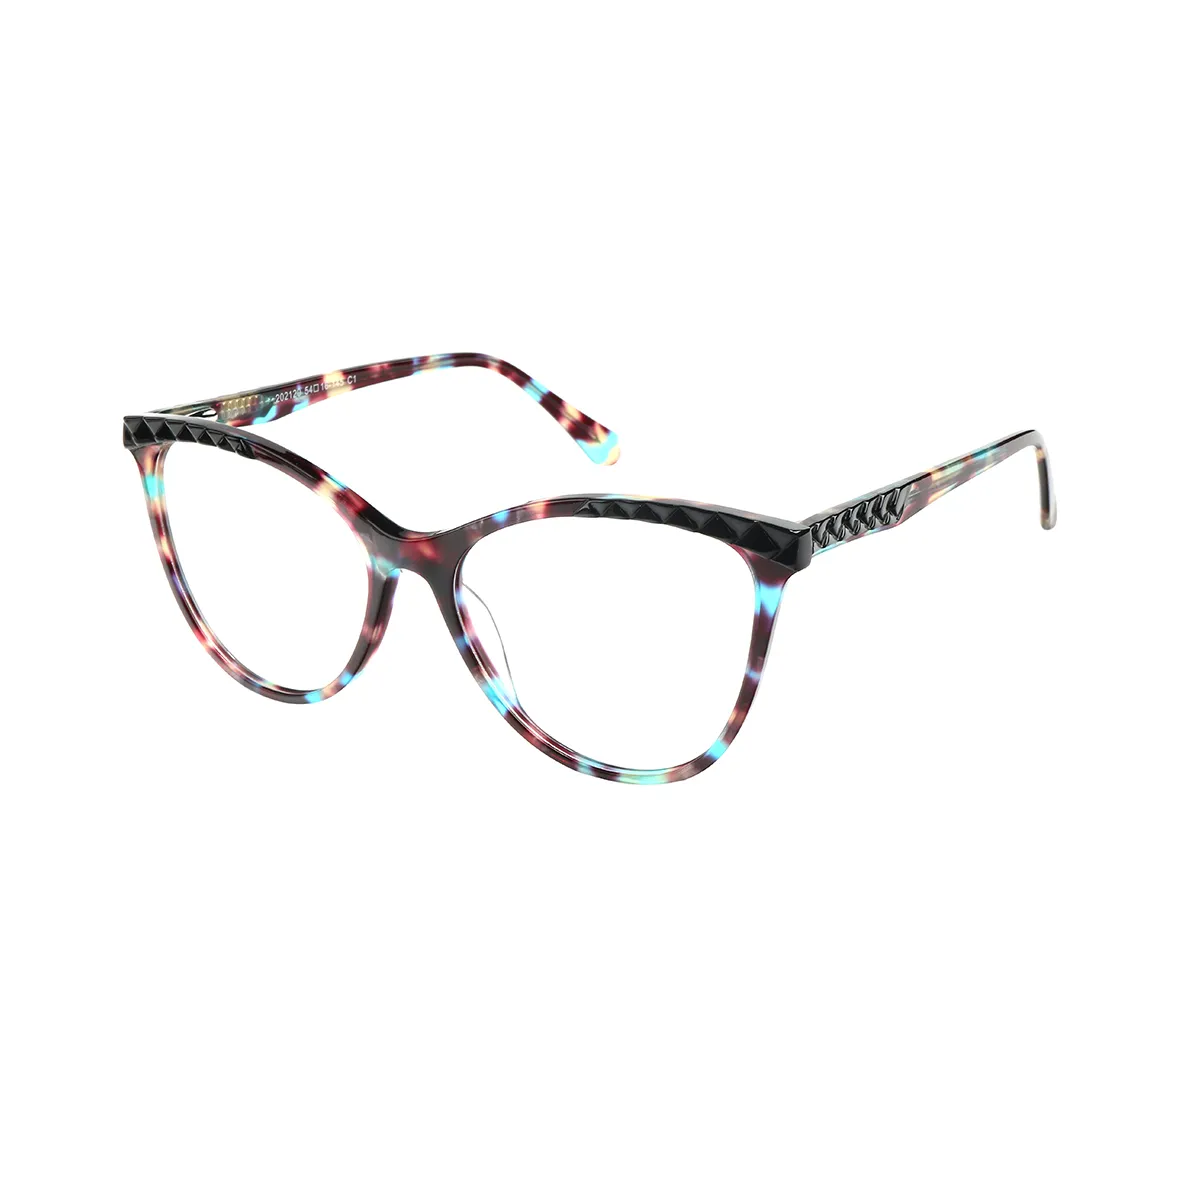 Fashion Cat-eye Purple/Red Tortoiseshell Glasses for Women